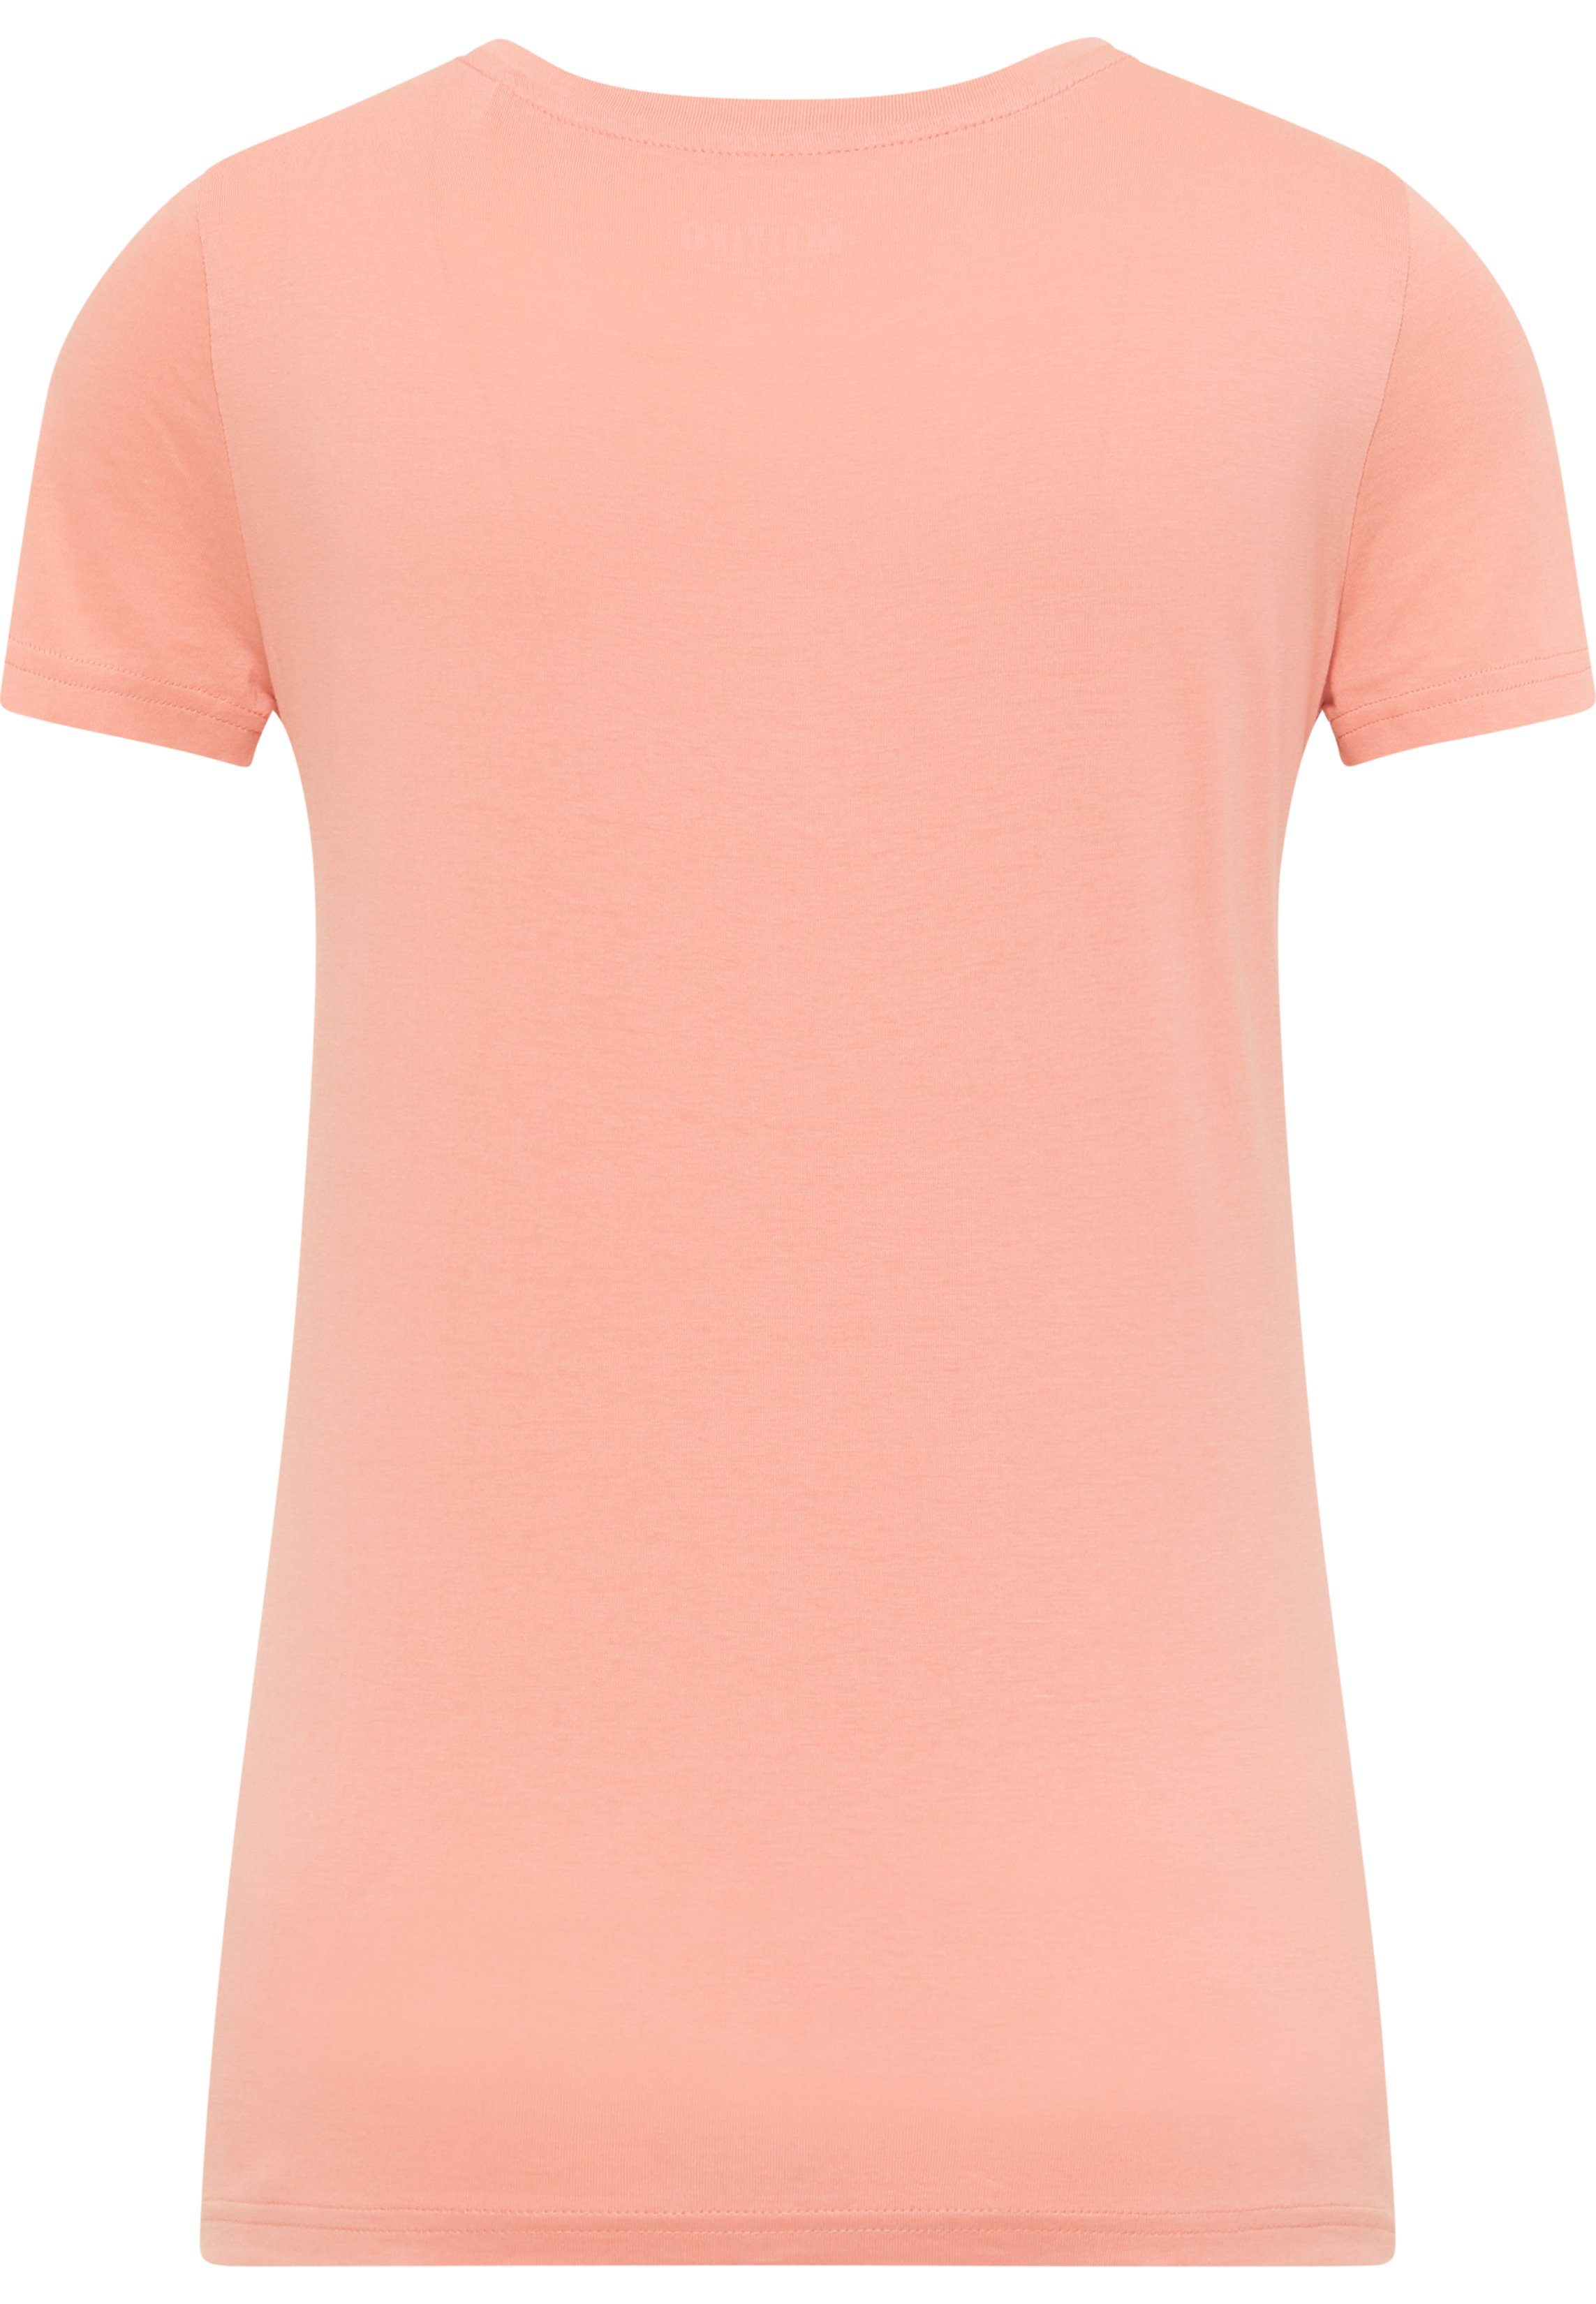 Print T-Shirt Alexia C pink MUSTANG